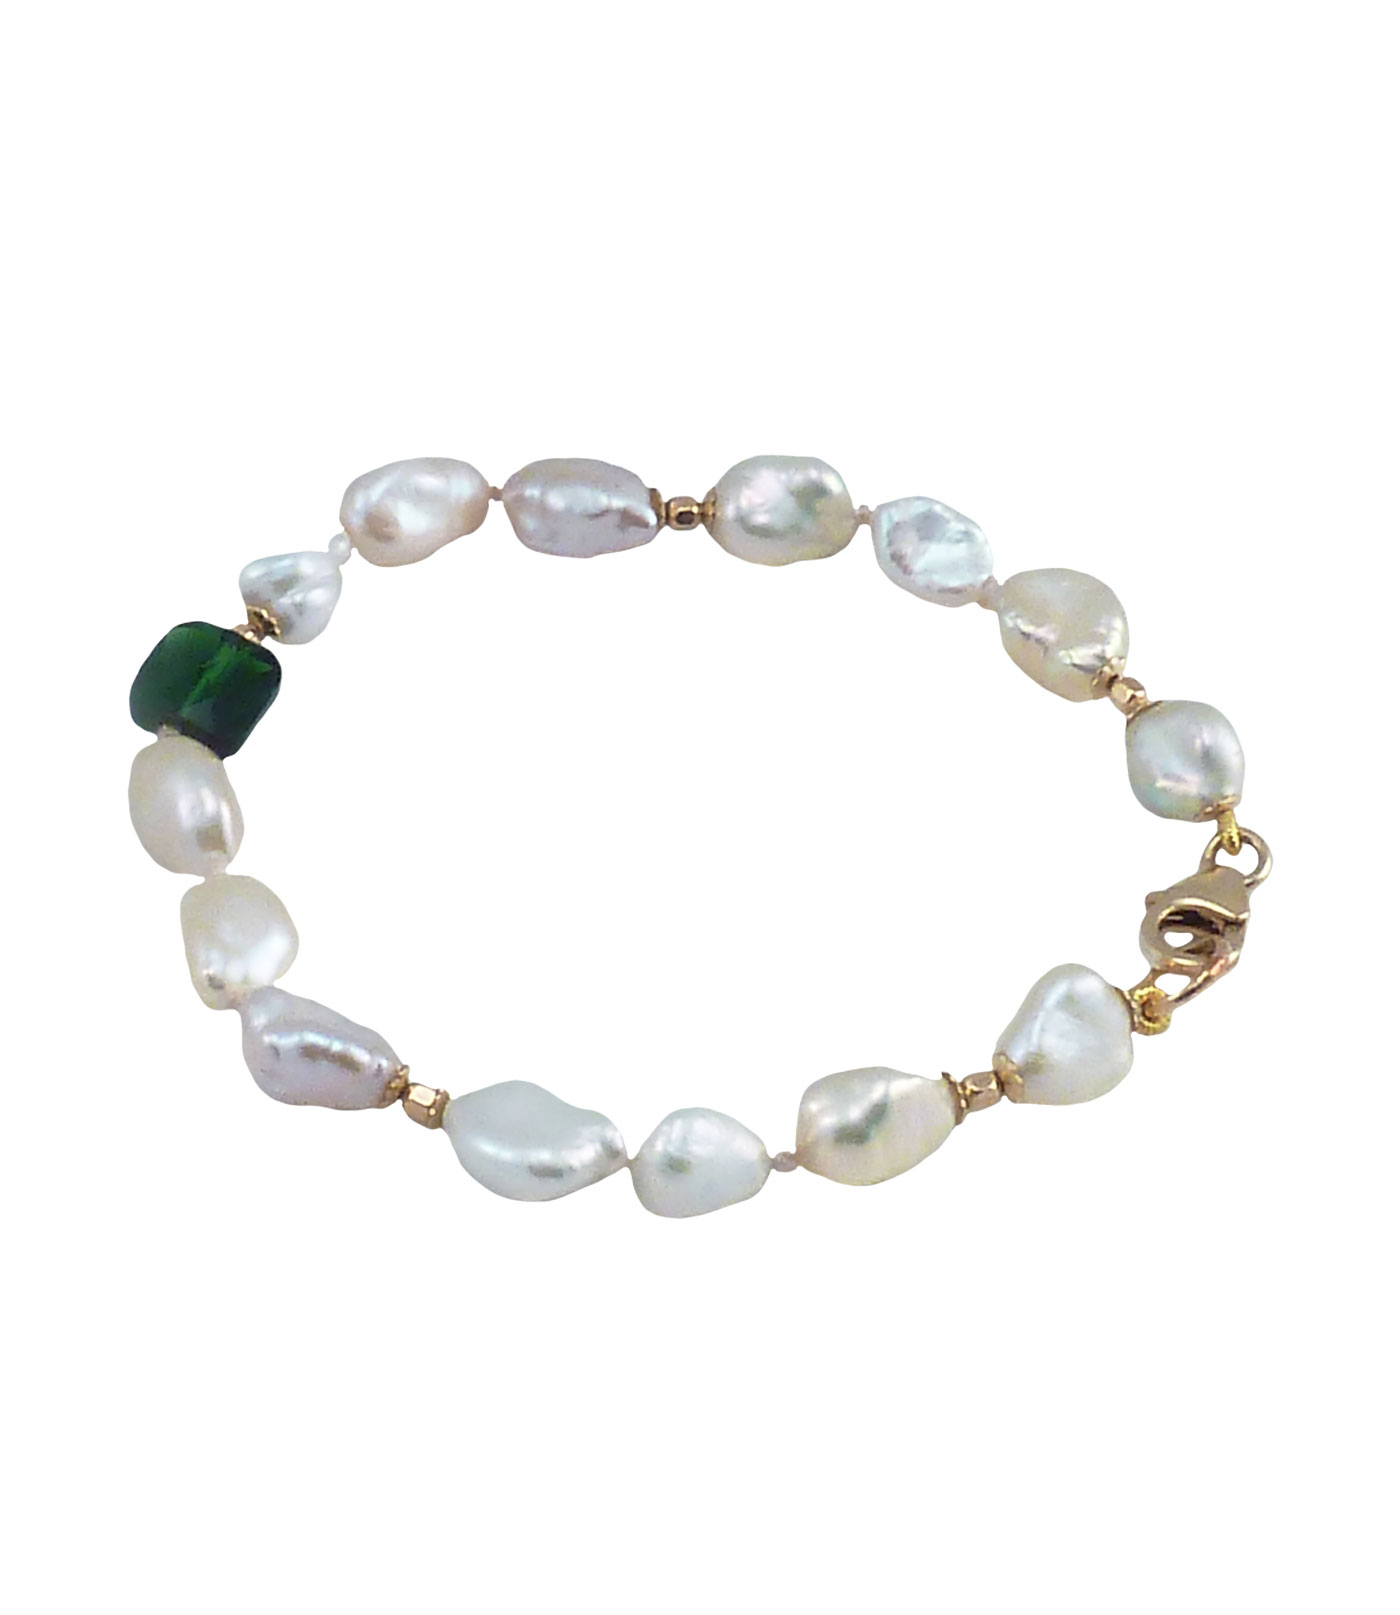 Pearls bracelet keshi pearls is a great accessory for stylish women